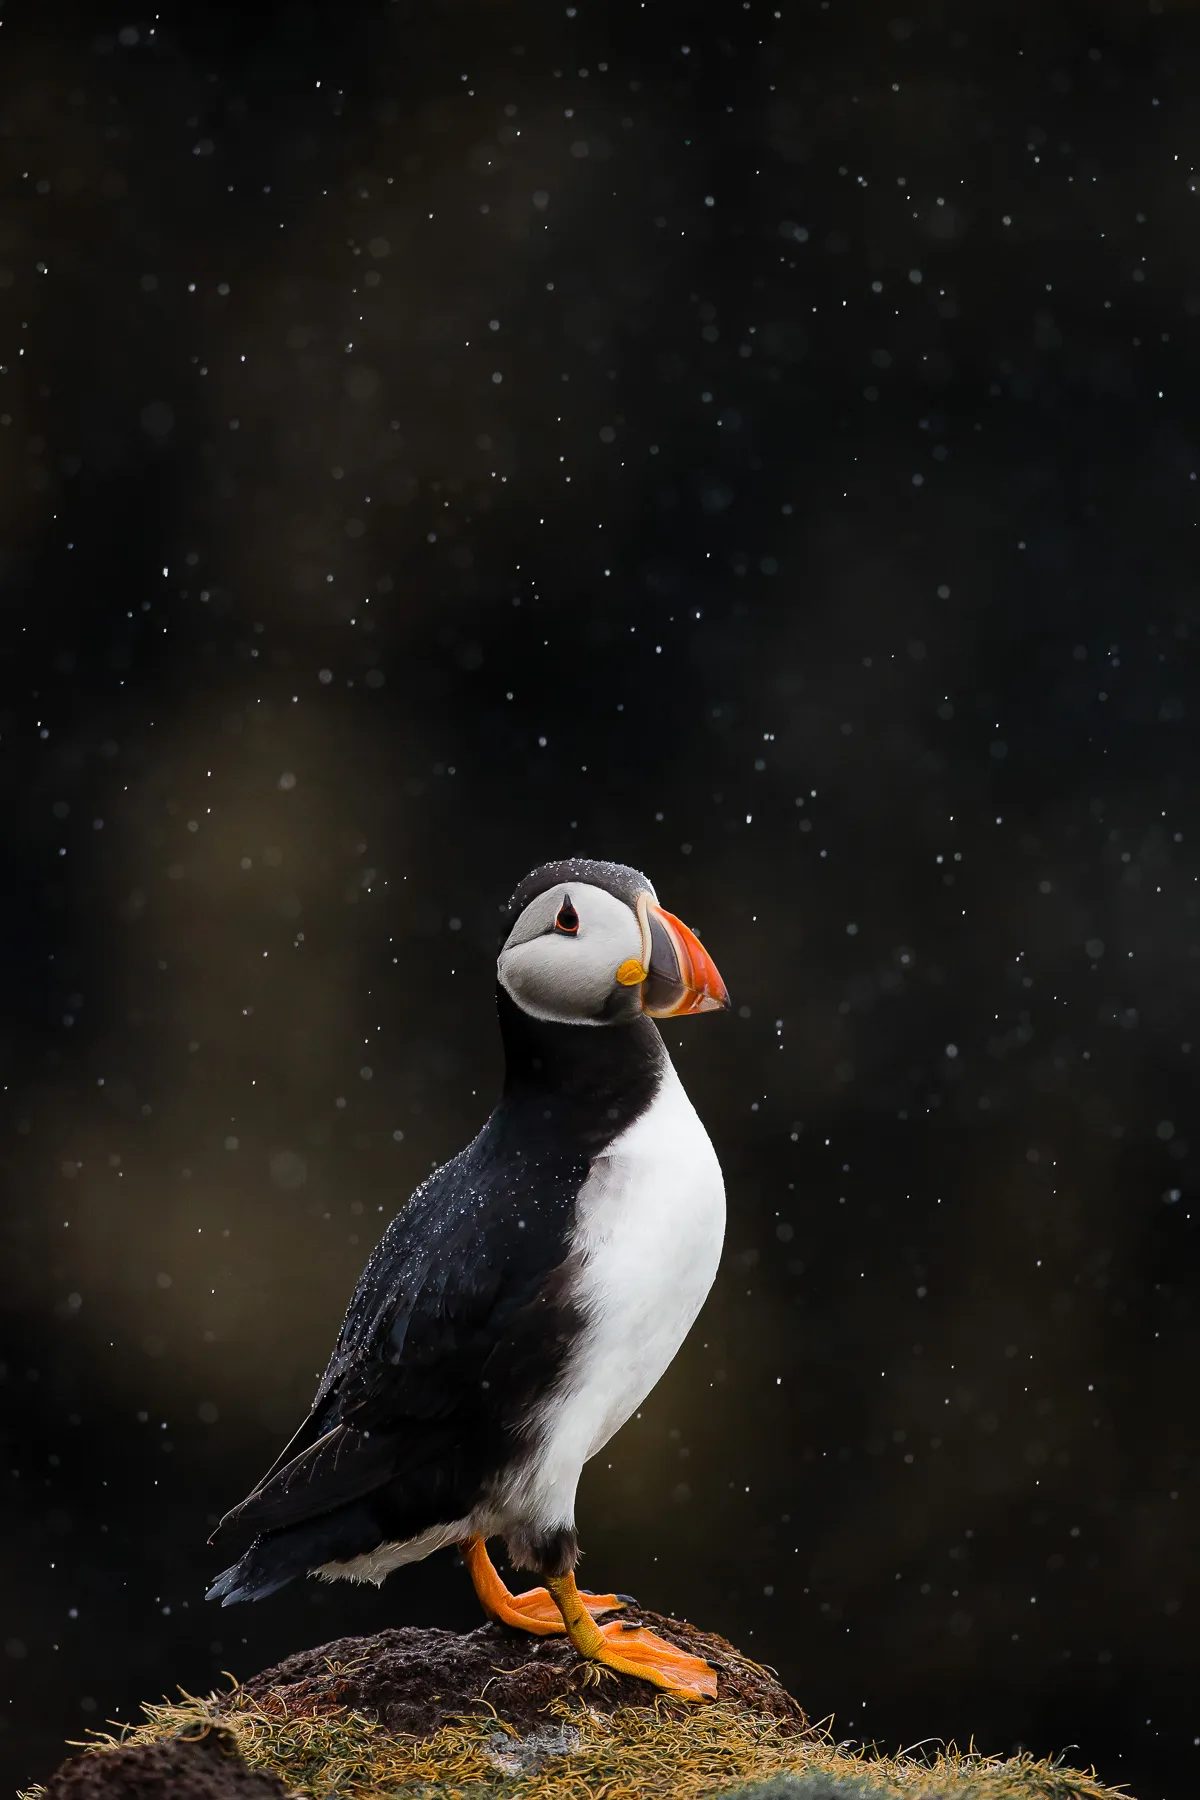 Category: Portfolio Award gold award winner. STANDING IN THE RAIN: Atlantic puffin. © Kevin Morgans (UK) /Bird Photographer of the Year